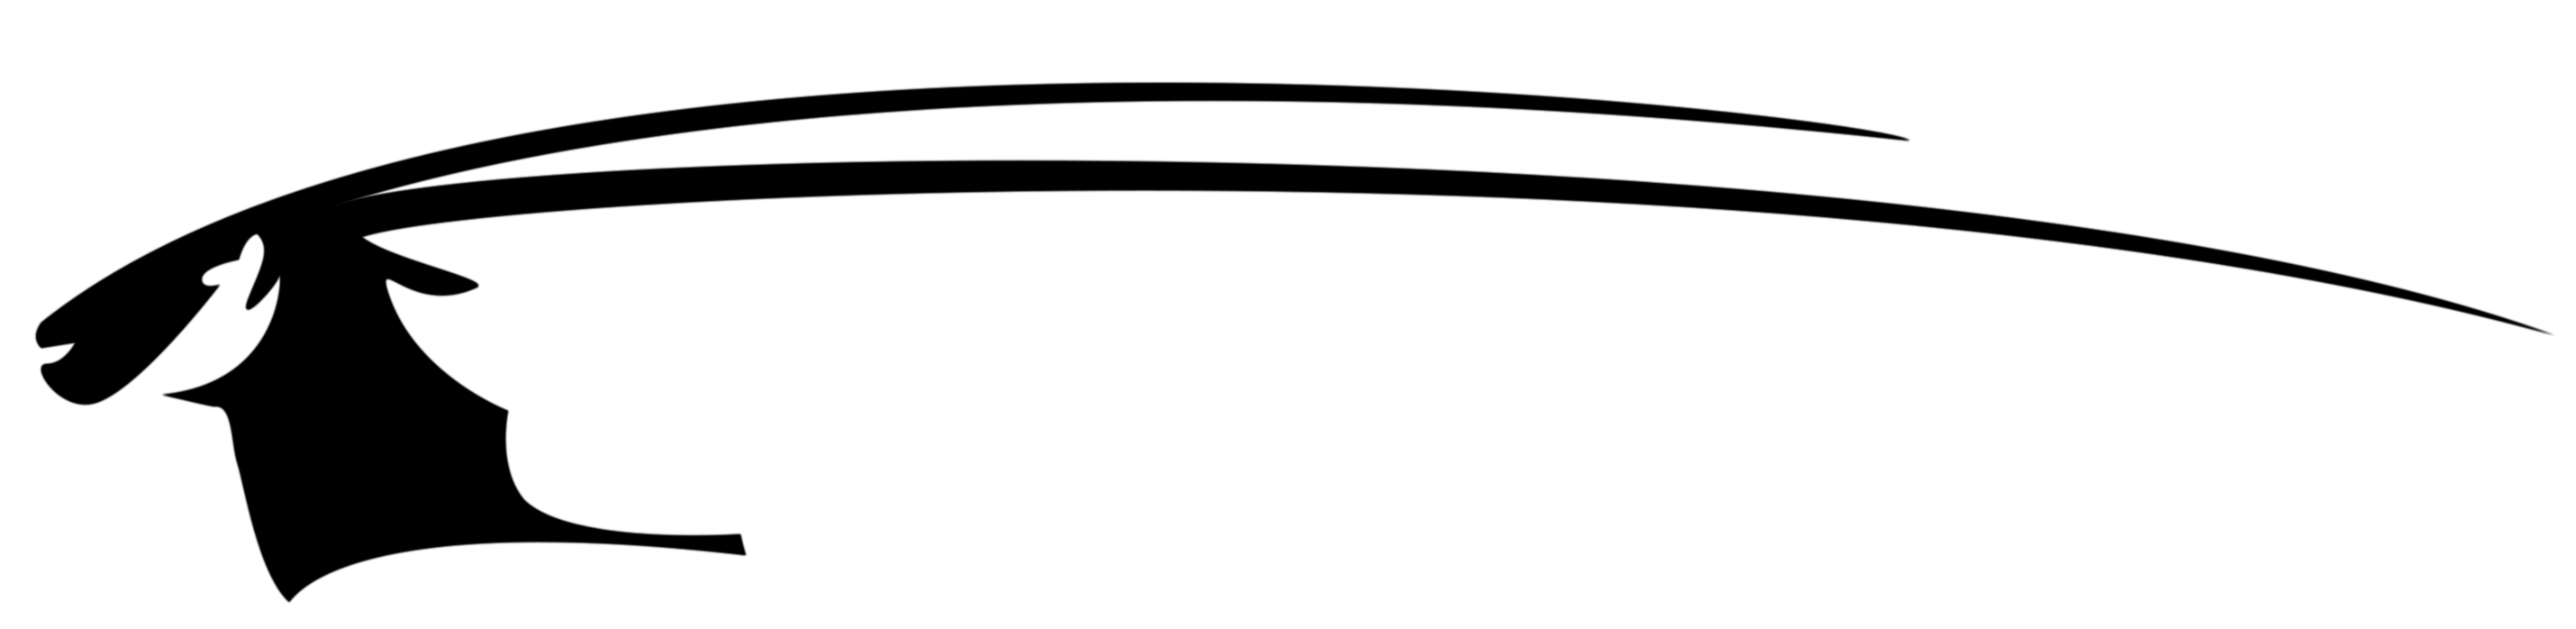 вариант логотипа_4